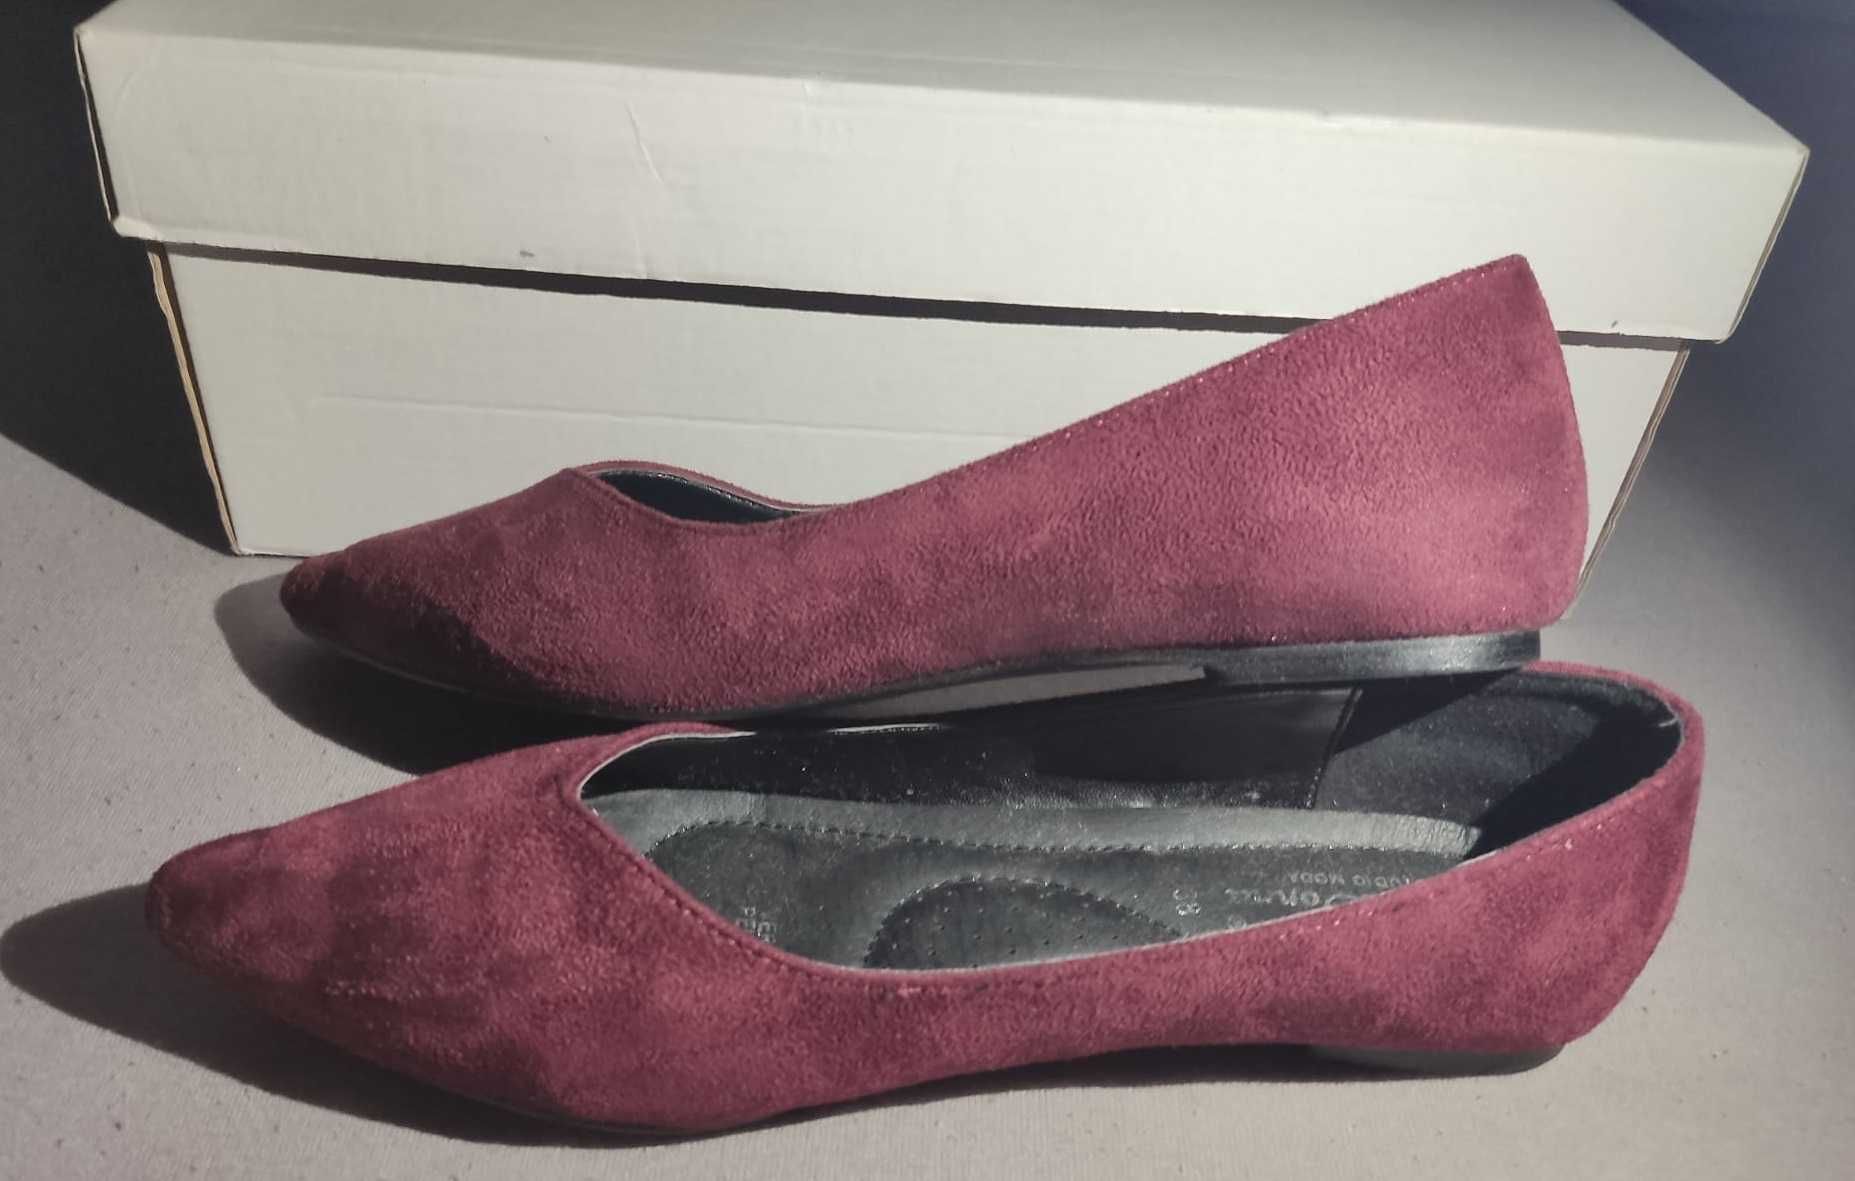 Pantofi Benvenuti Solo Donna Studio Moda marimea 38 din piele intoarsa